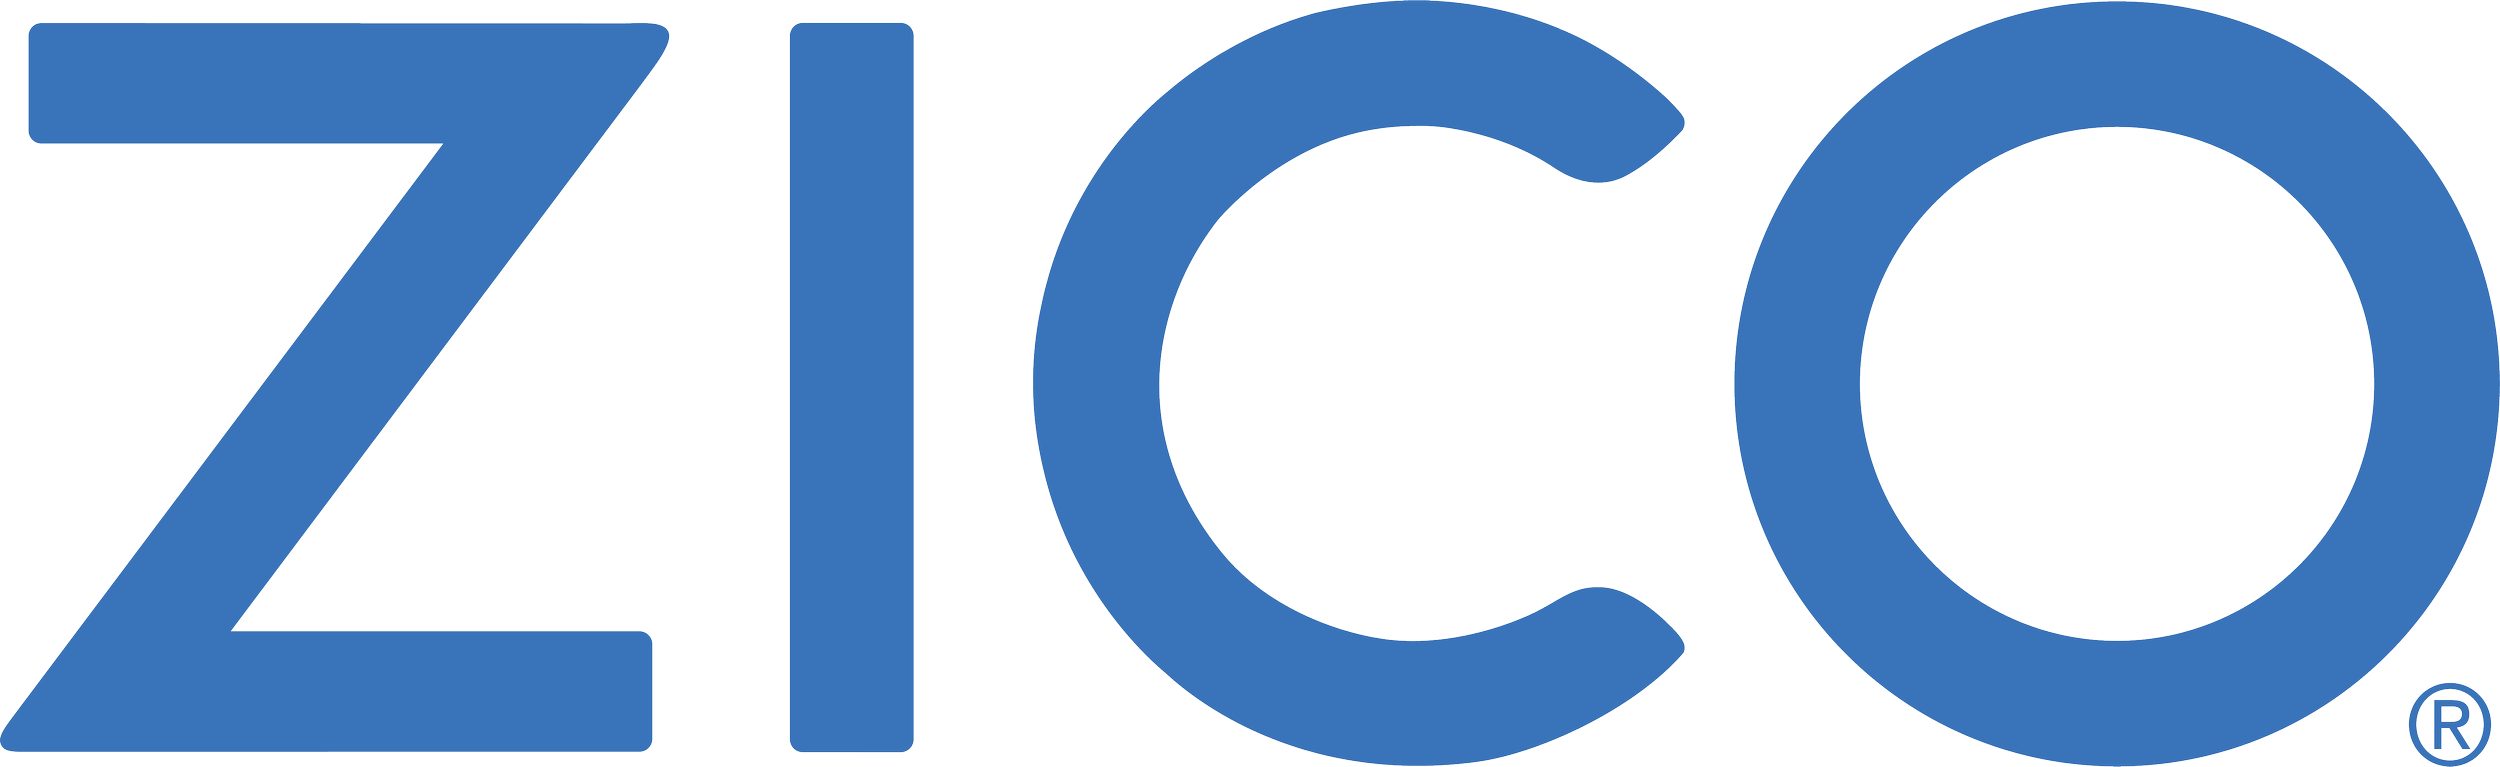 ZICO Logo Blue.png